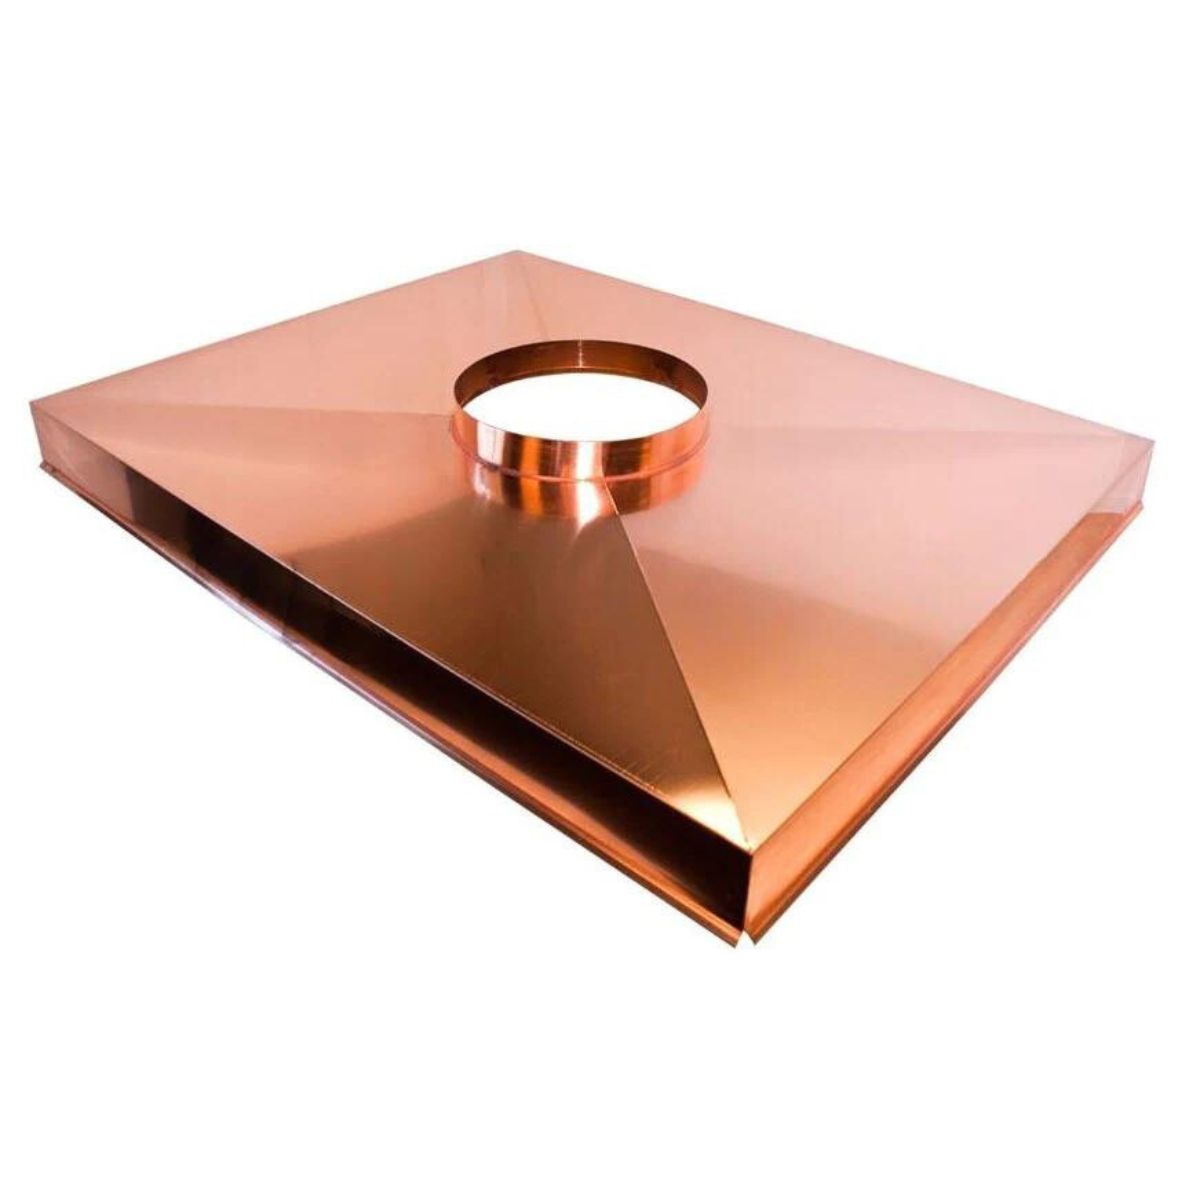 Solid Copper Pyramid - 1 5/8